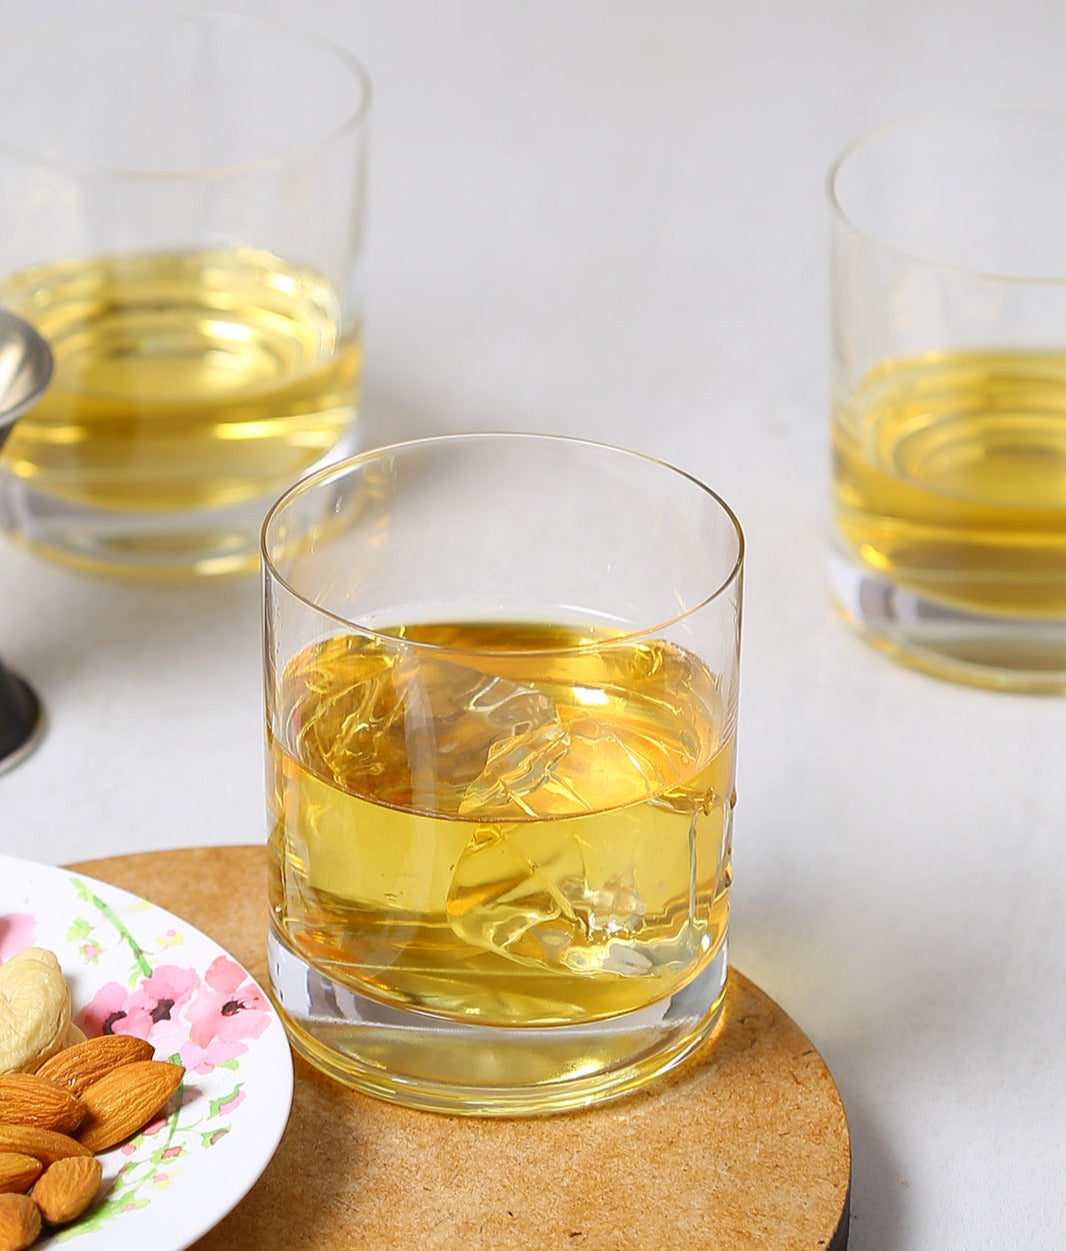 Elegant whiskey glass enhancing whiskey aromas and flavors